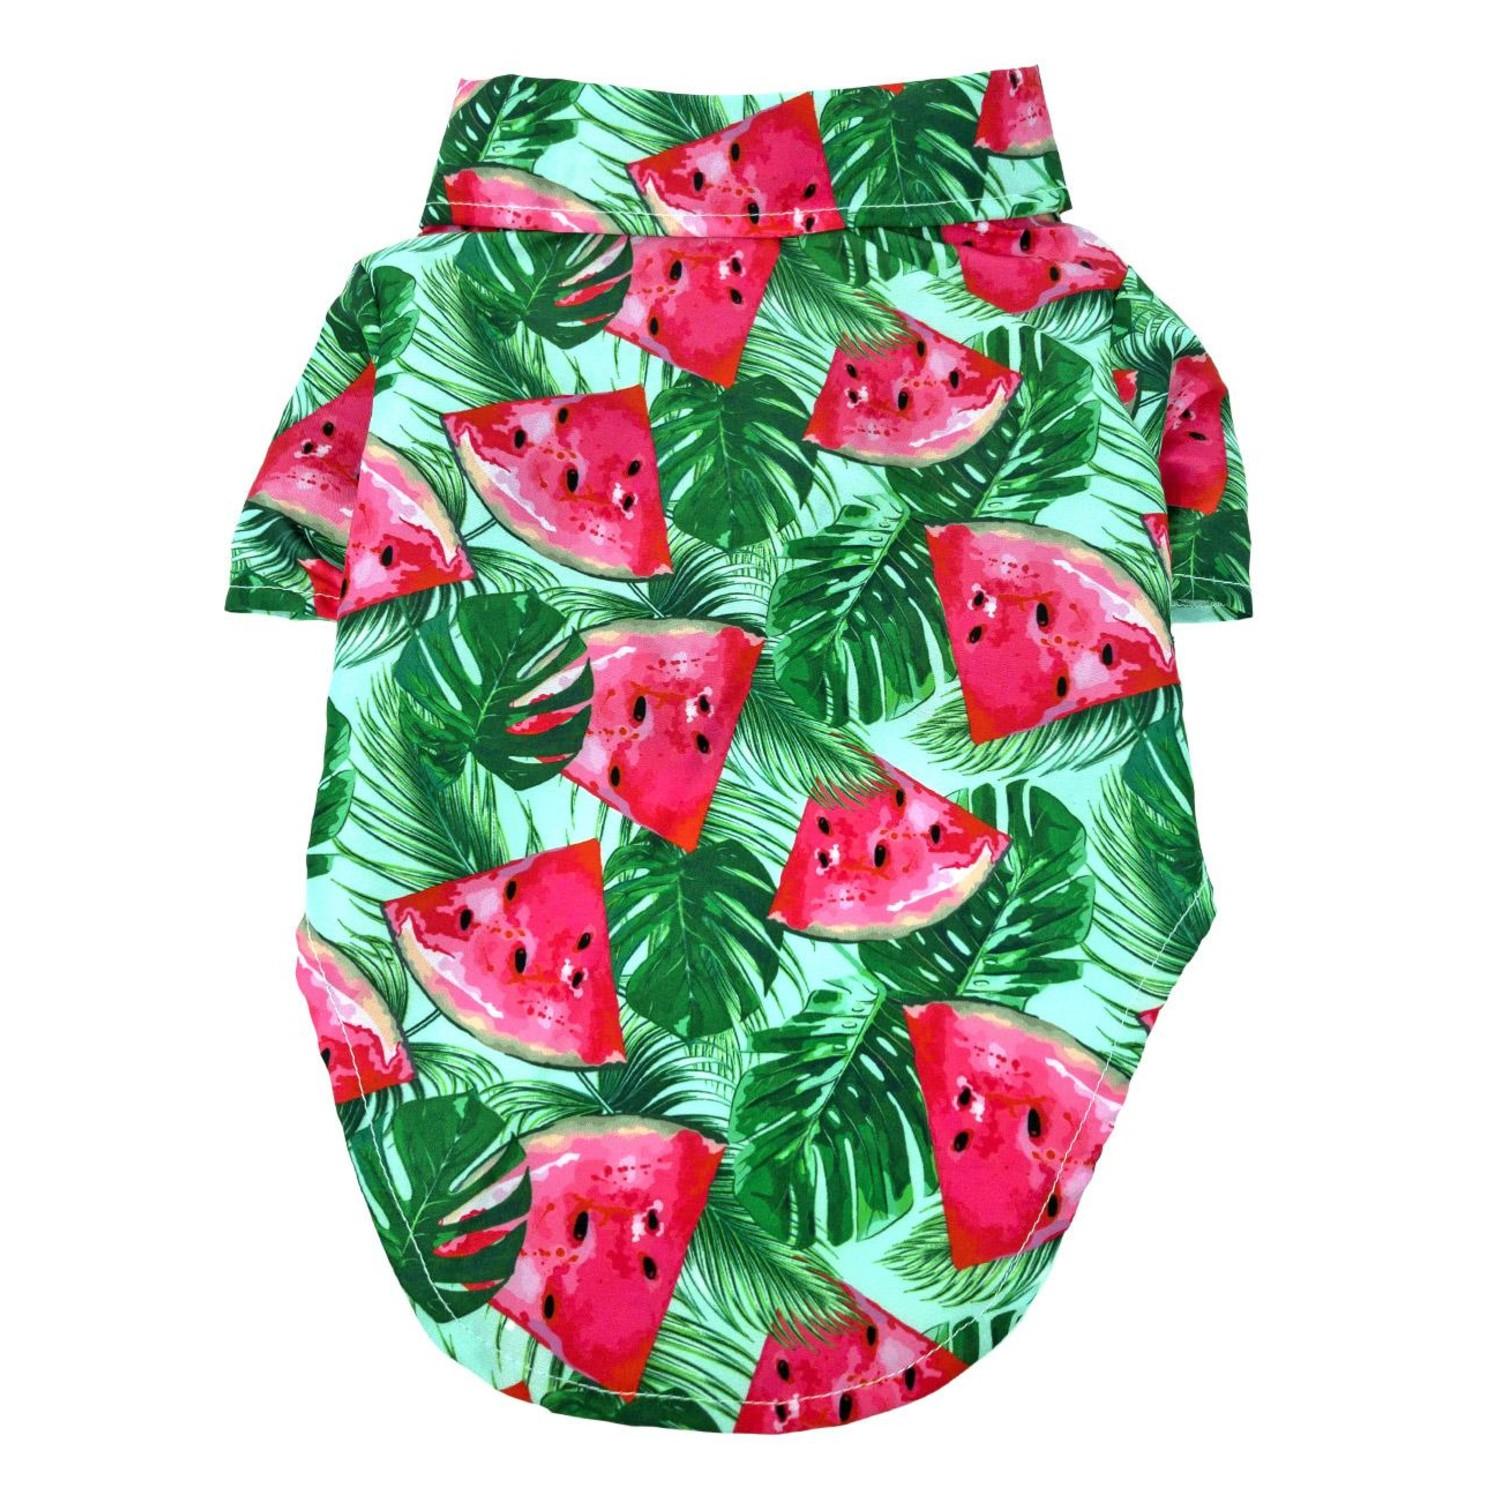 Hawaiian Camp Shirt by Doggie Design - Juicy Watermelon